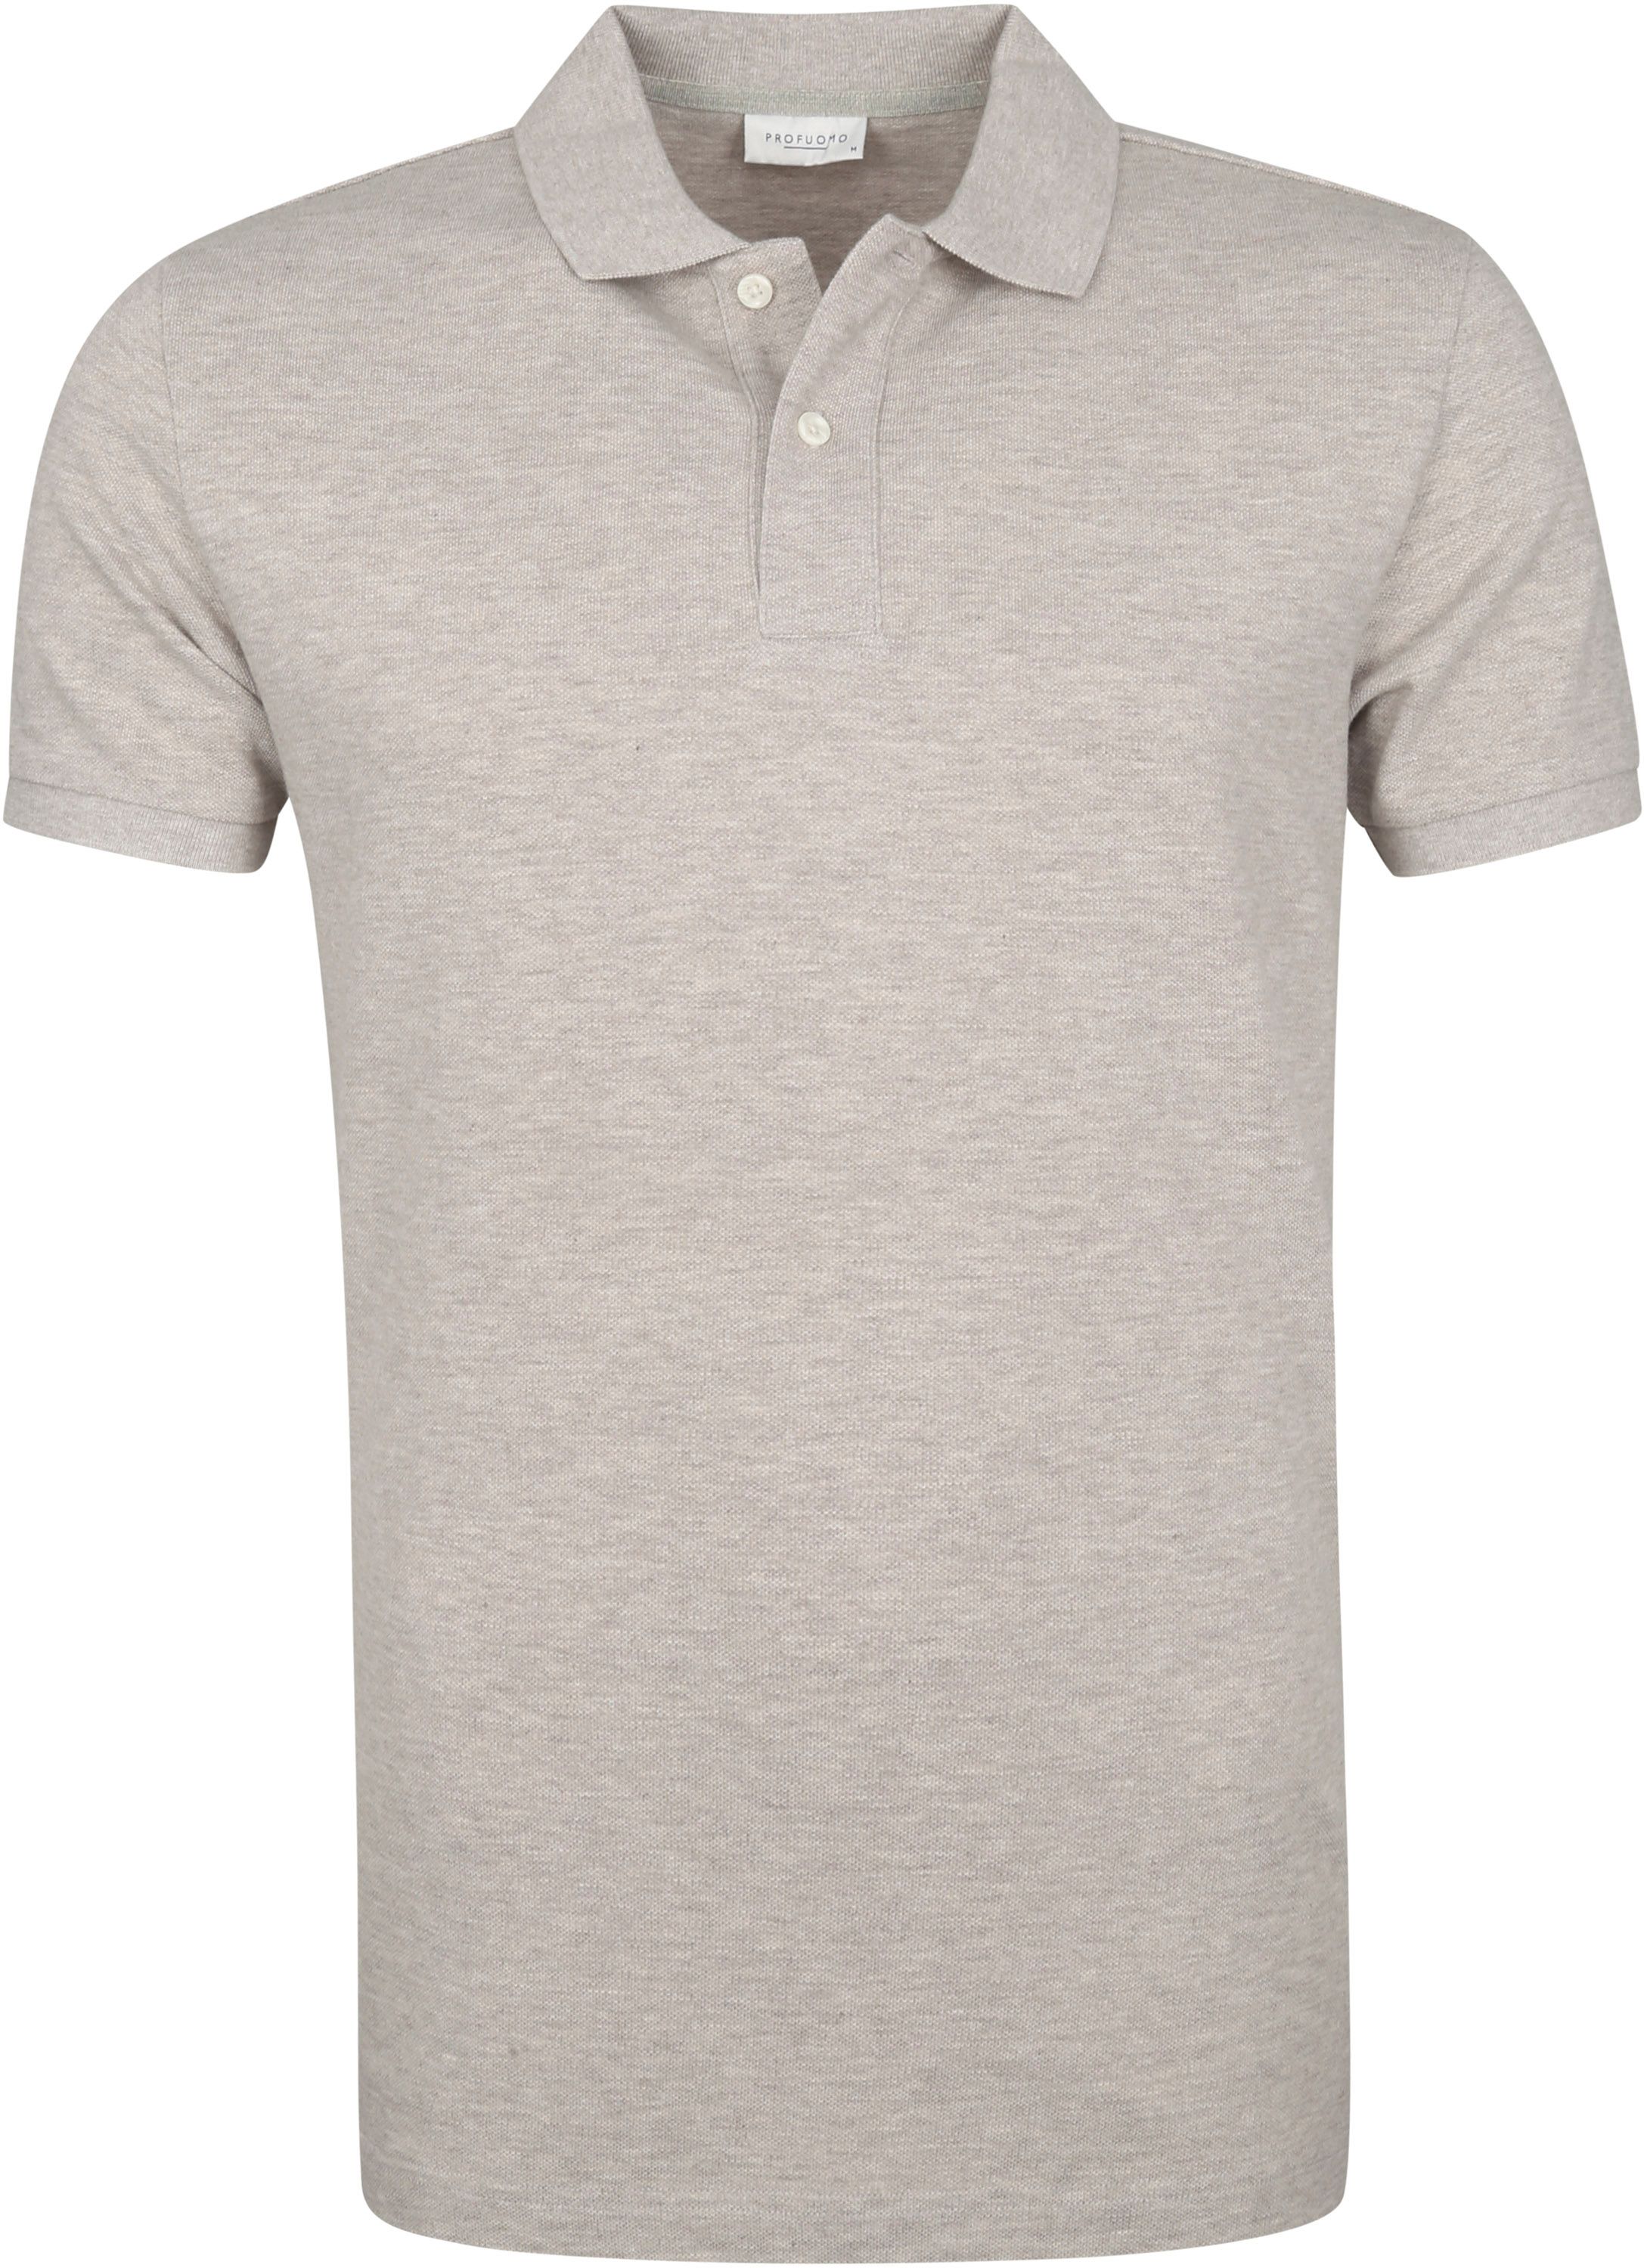 Profuomo Pique Polo Shirt Gray Melange Beige Grey size L